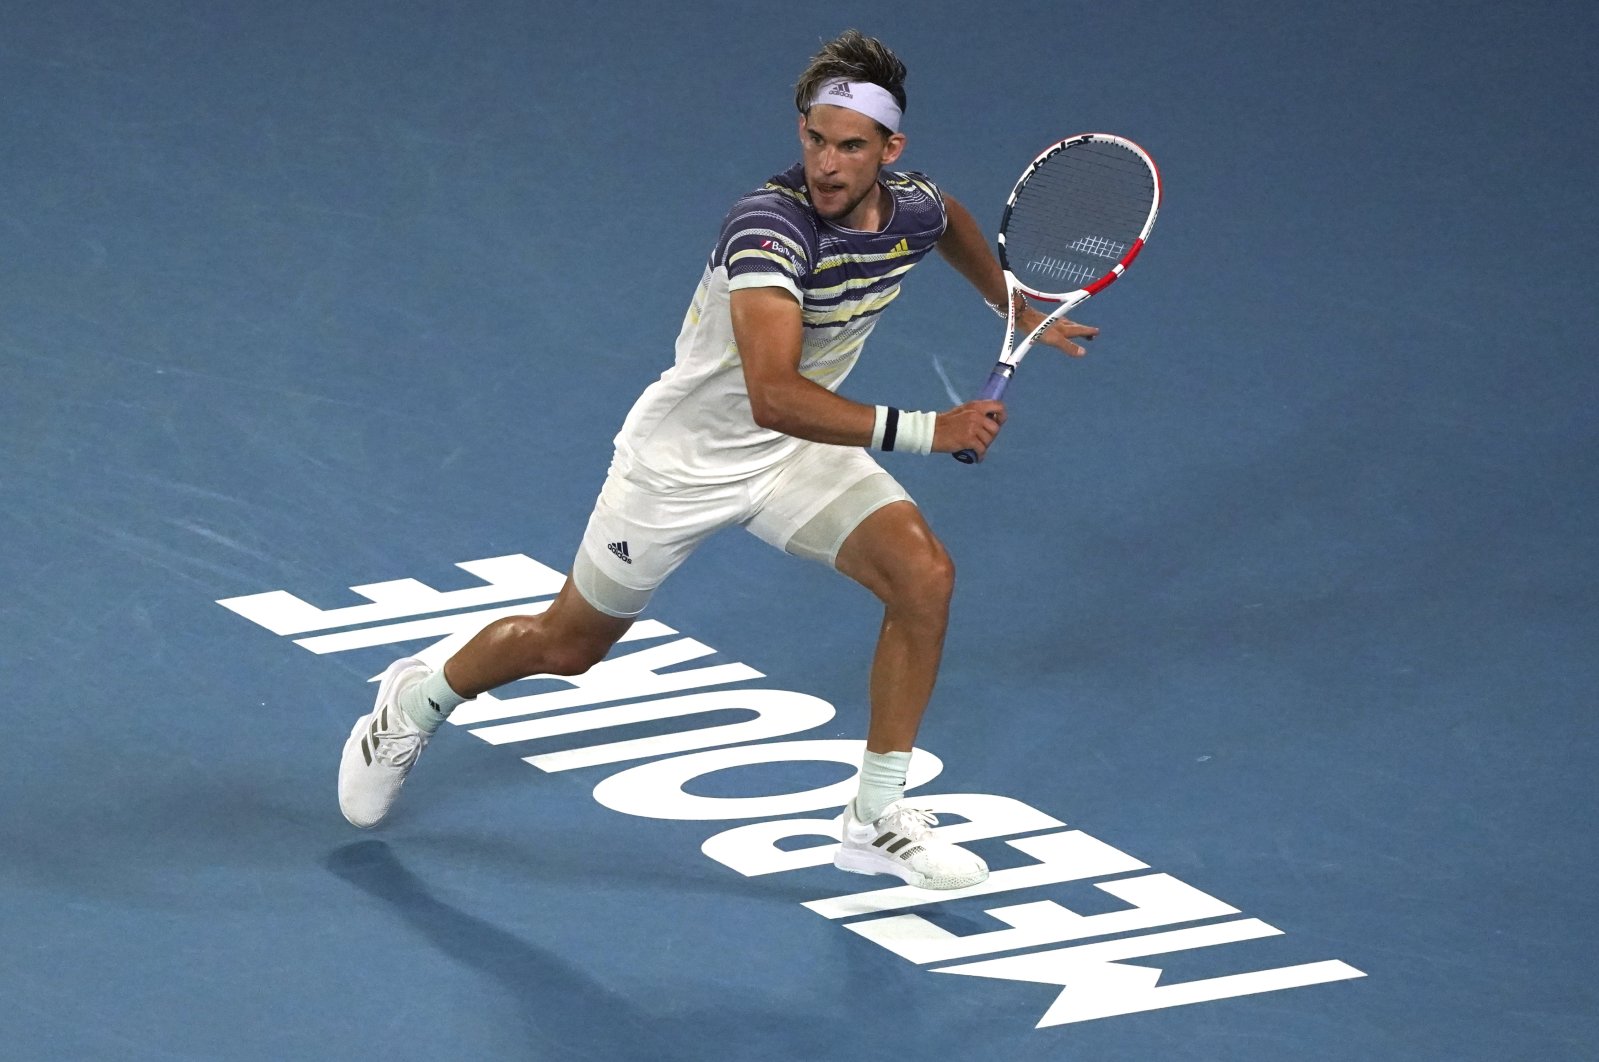 Dominic Thiem runs to play a shot to Rafael Nadal during a quarterfinal match at the Australian Open tennis championship in Melbourne, Australia, Jan. 29, 2020. (AP Photo)